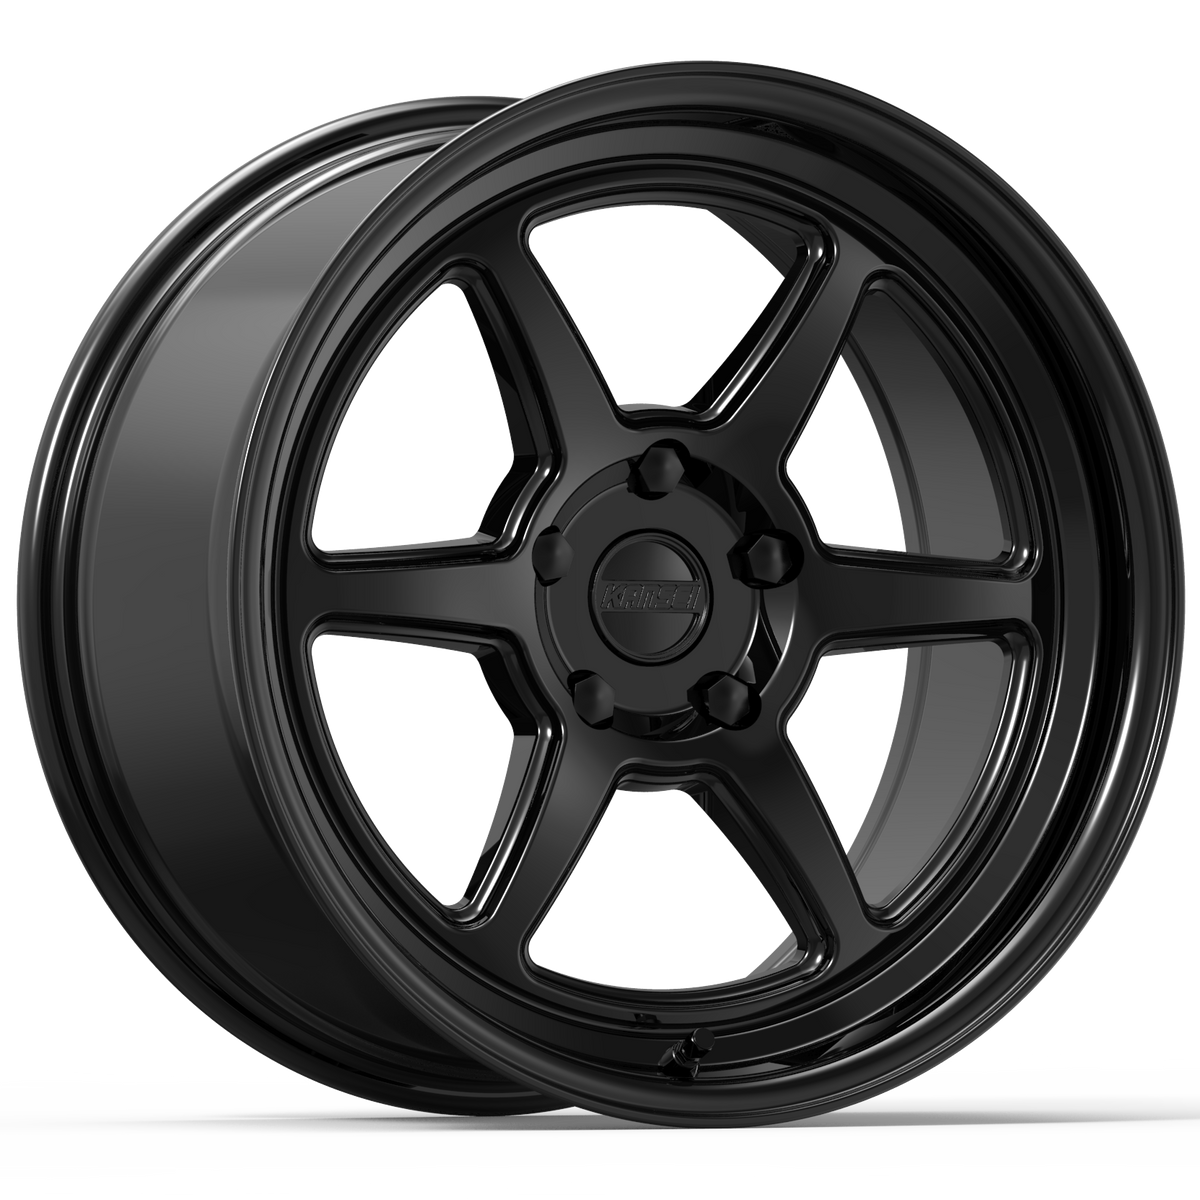 K14B ROKU Wheel, Size: 17" x 8.50", Bolt Pattern: 6 x 135 mm, Backspace: 4.36" [Finish: Gloss Black]